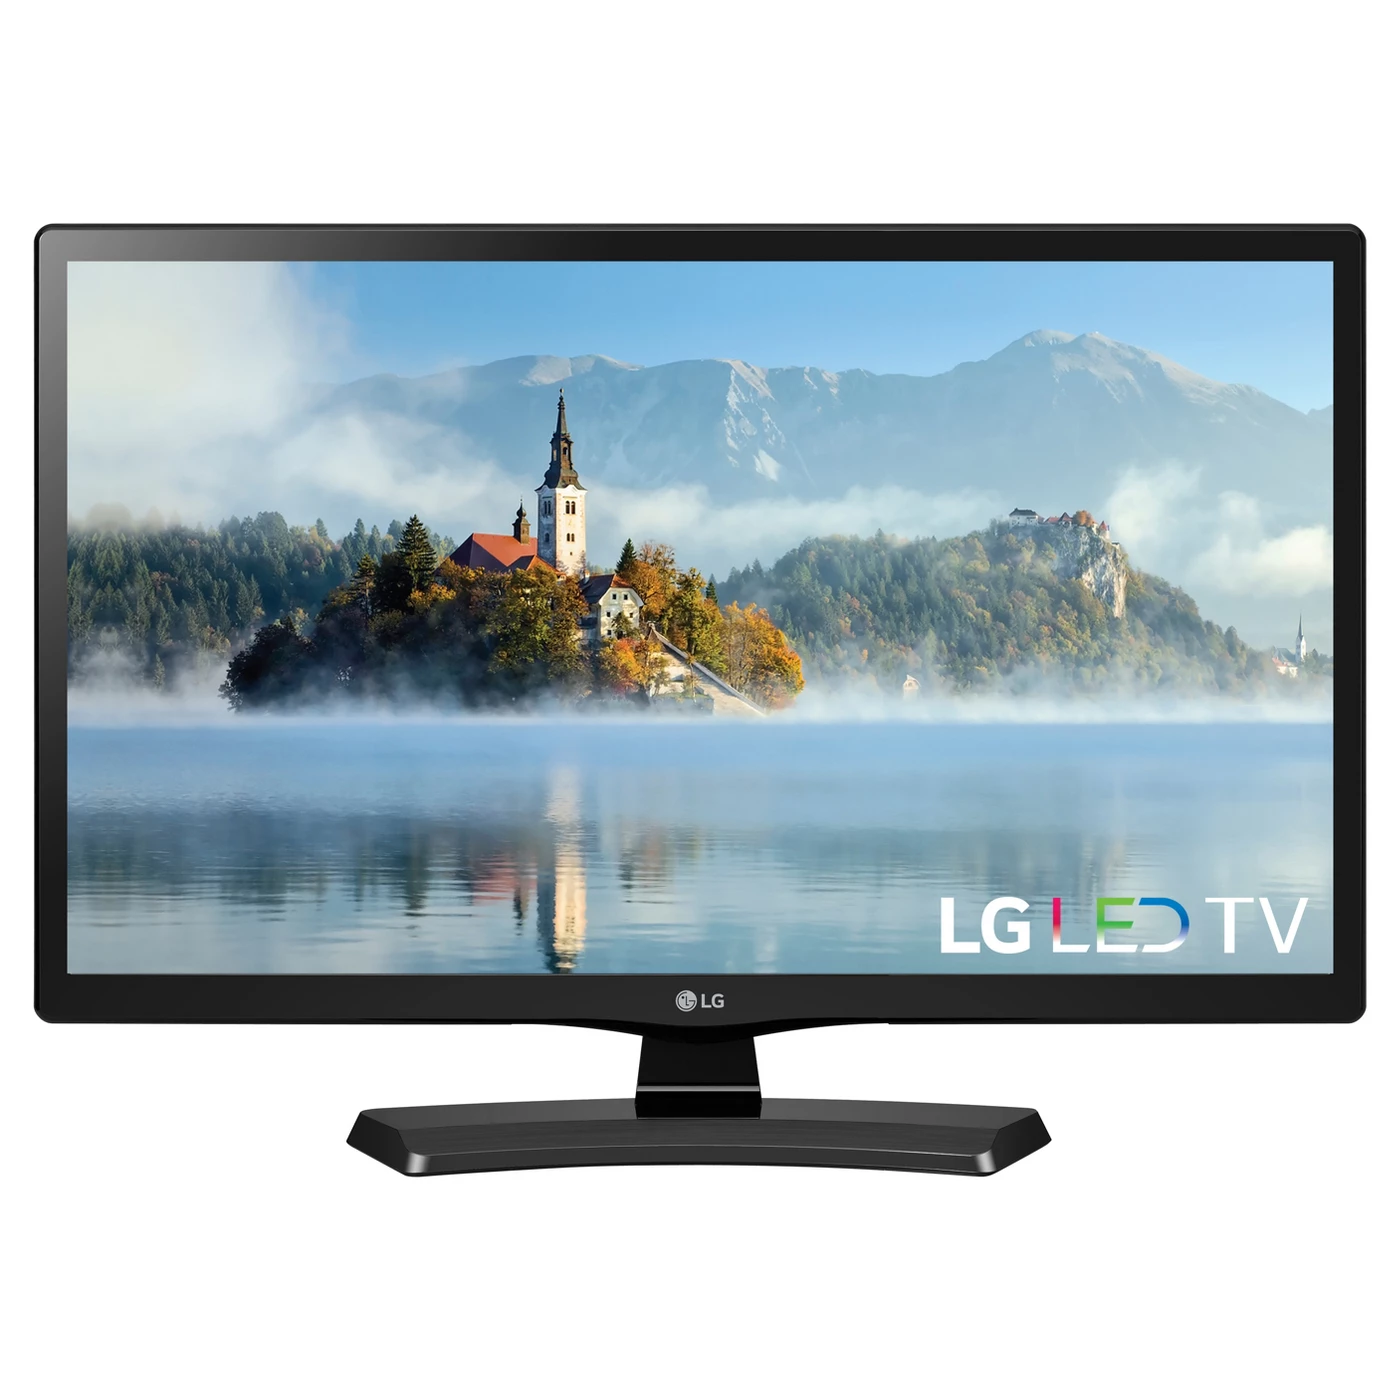 LG 24" Class 720p 60Hz LED HDTV - 24LF454B - image 1 of 8